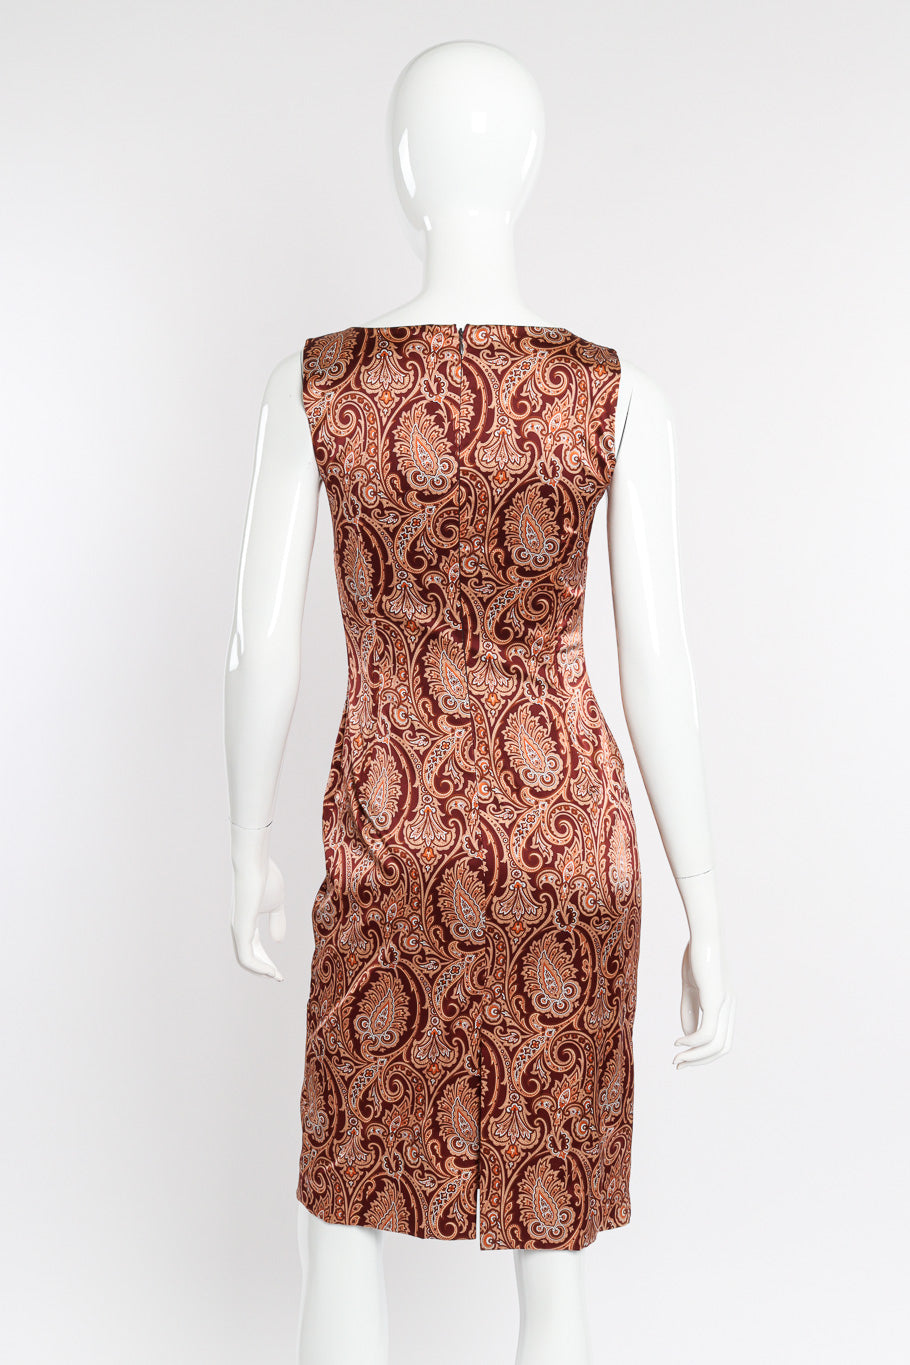 Sheath dress by Dolce & Gabbana on mannequin back @recessla